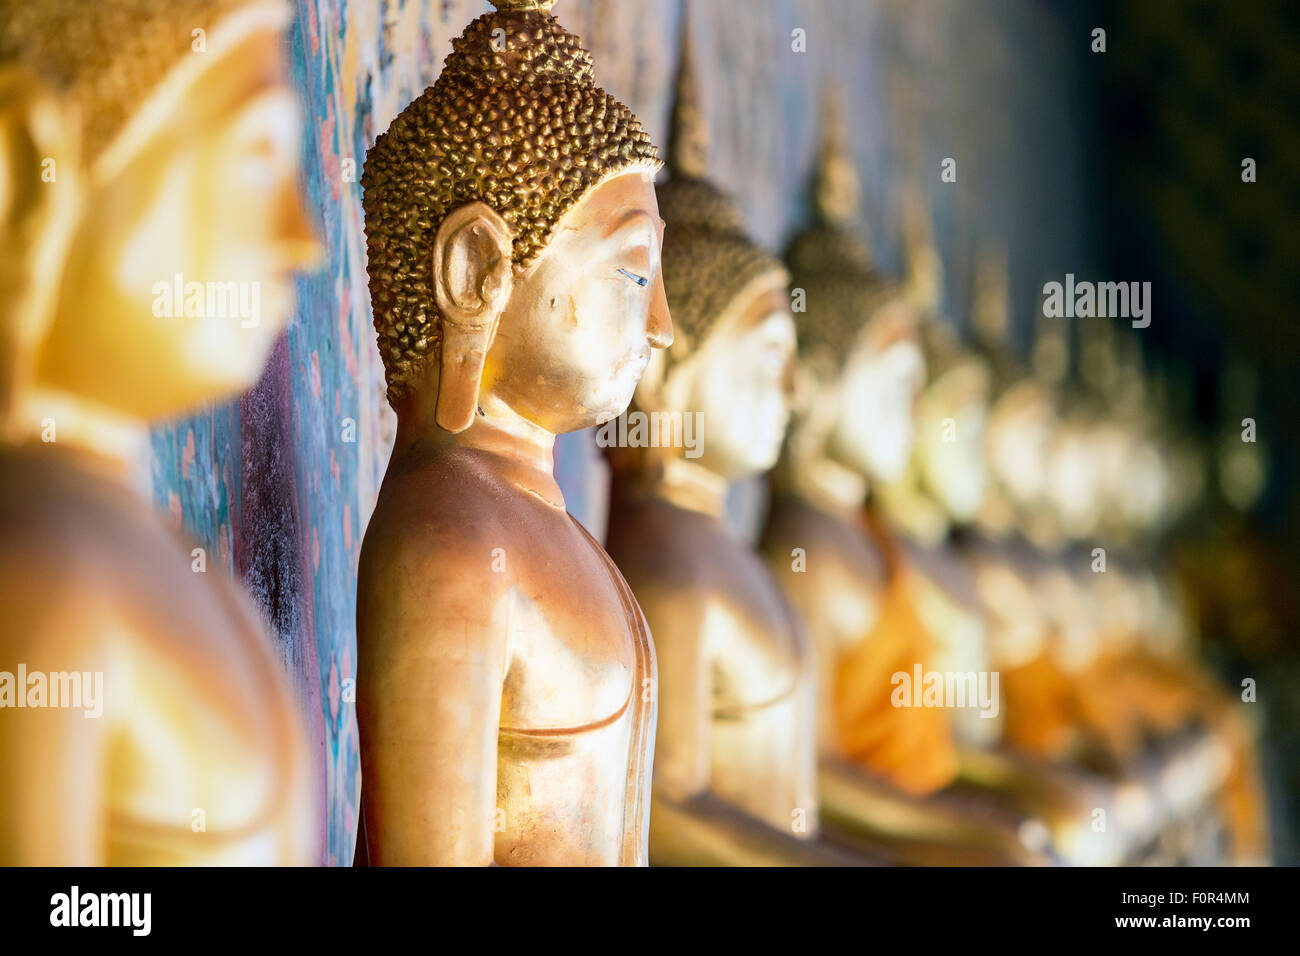 Thailand, Bangkok, Wat Arun Stock Photo